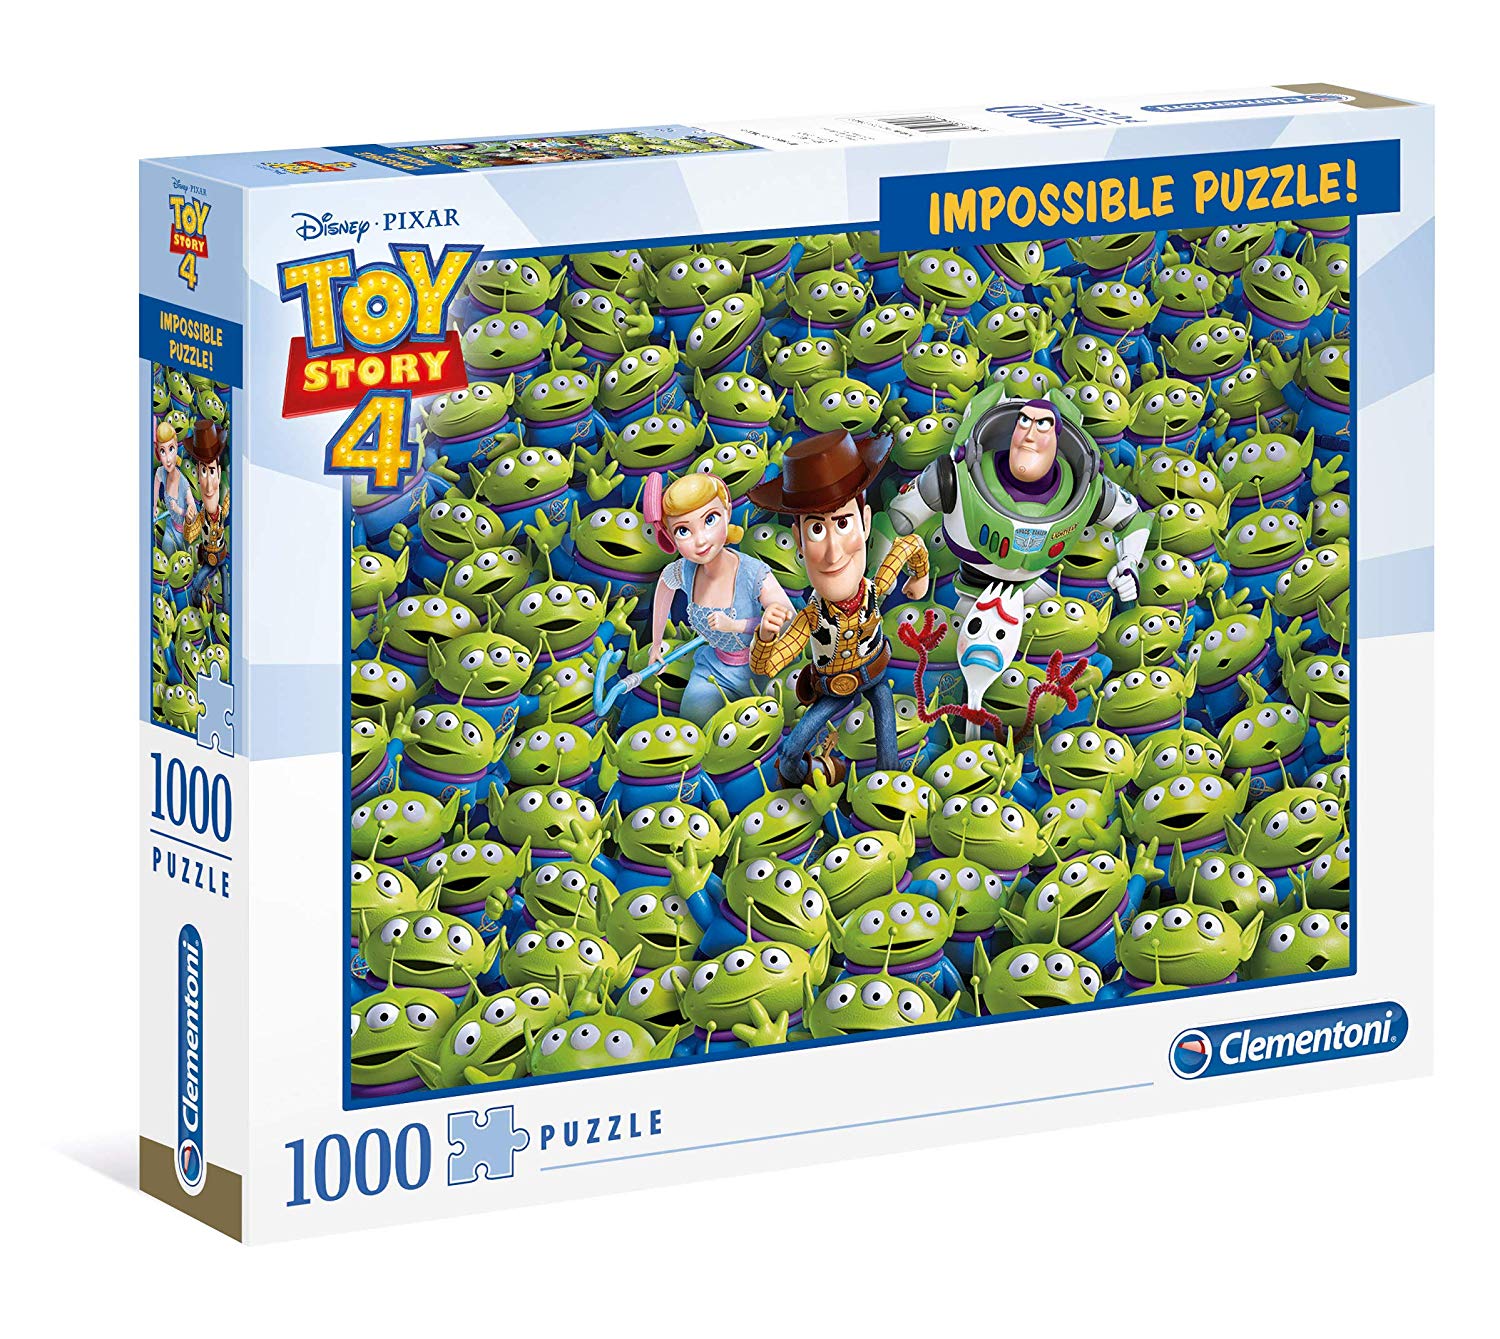 Clementoni Impossible Puzzle Toy Story Pezzi Multi Coloured